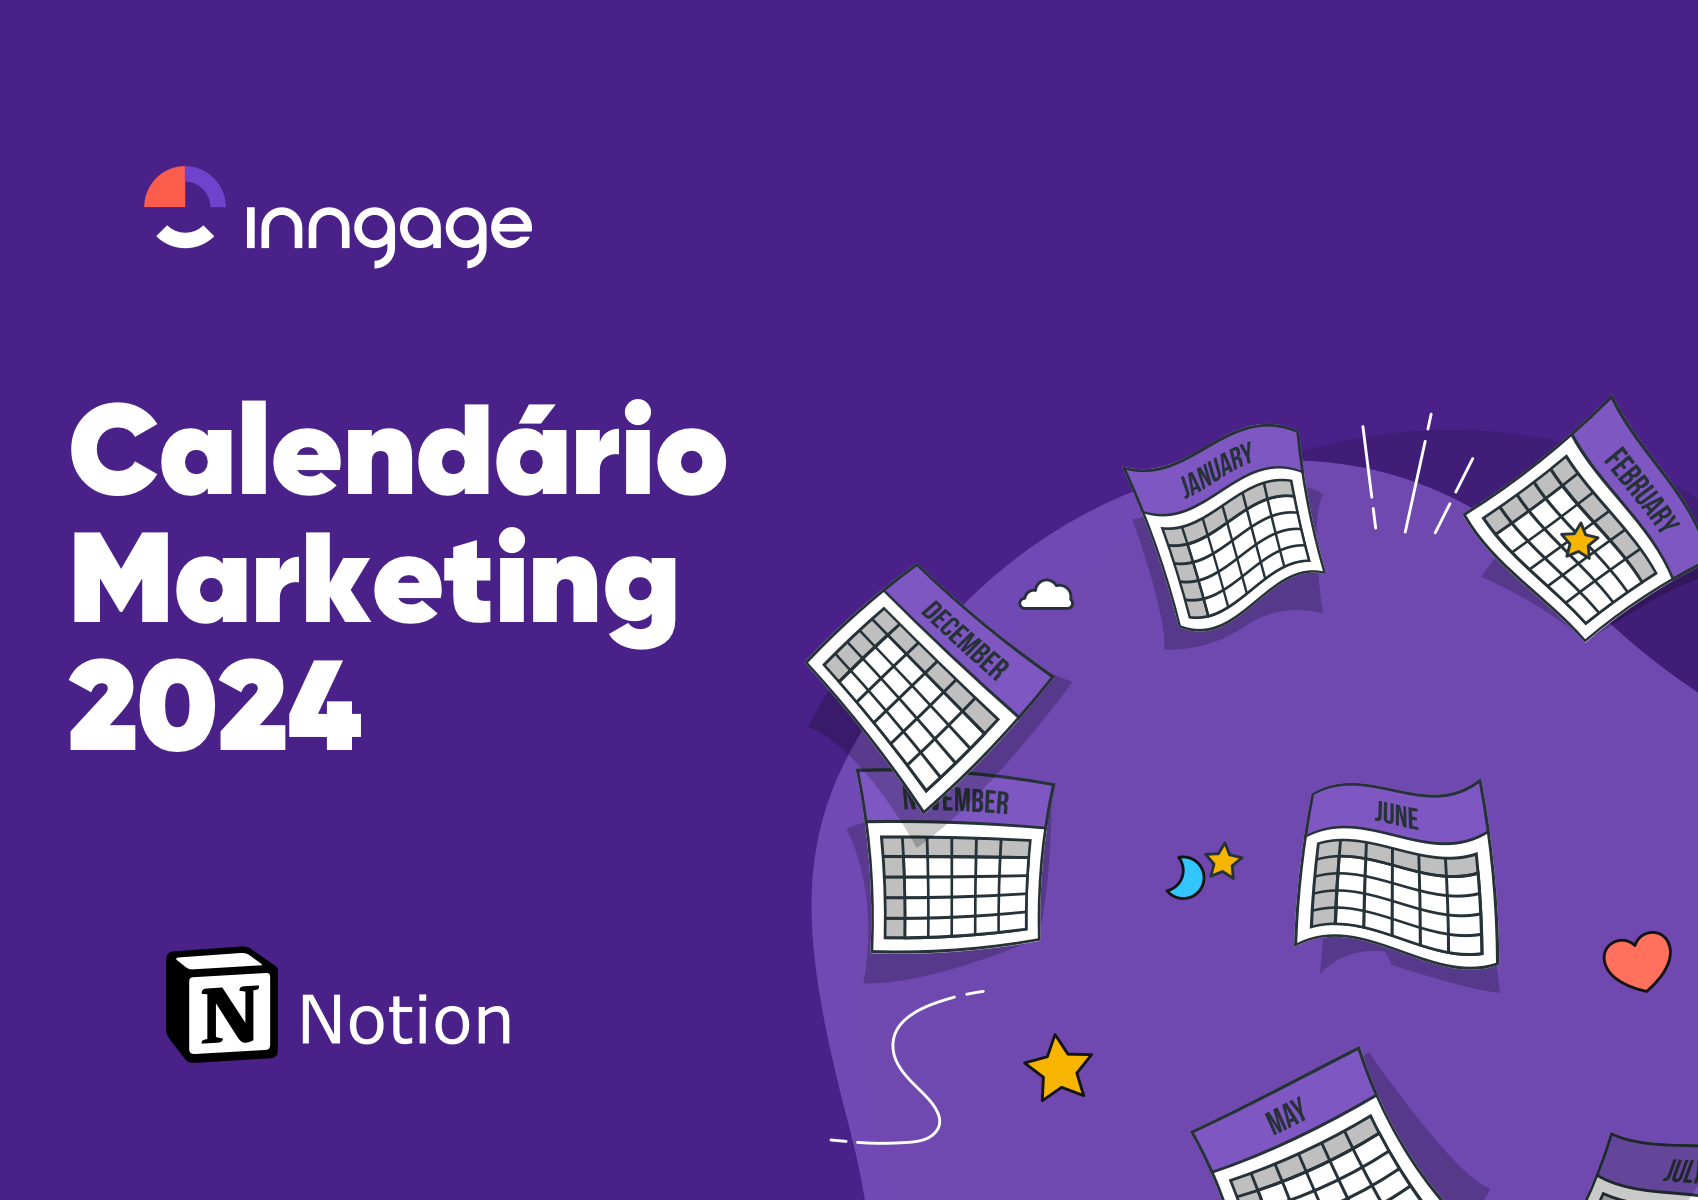 2020-as-mudanas-do-mobile-marketing